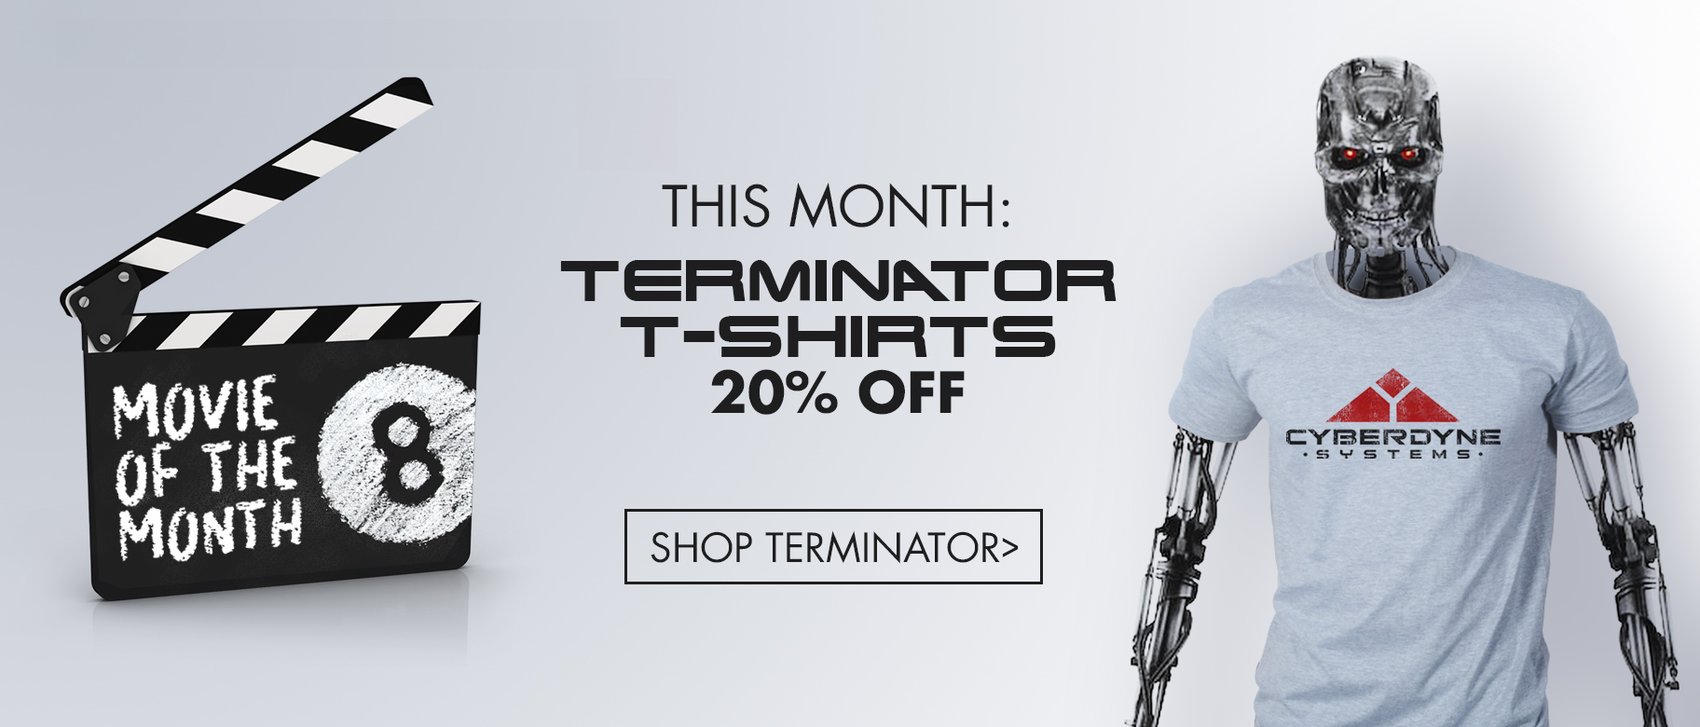 8Ball 8Ball: 20% off terminator t-shirts